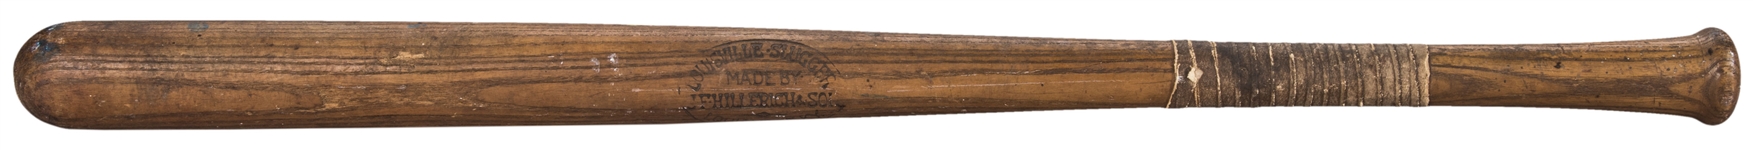 Circa 1890-1893 Original J.F. Hillerich & Son "Copy Righted" Center Brand Bat (PSA/DNA)